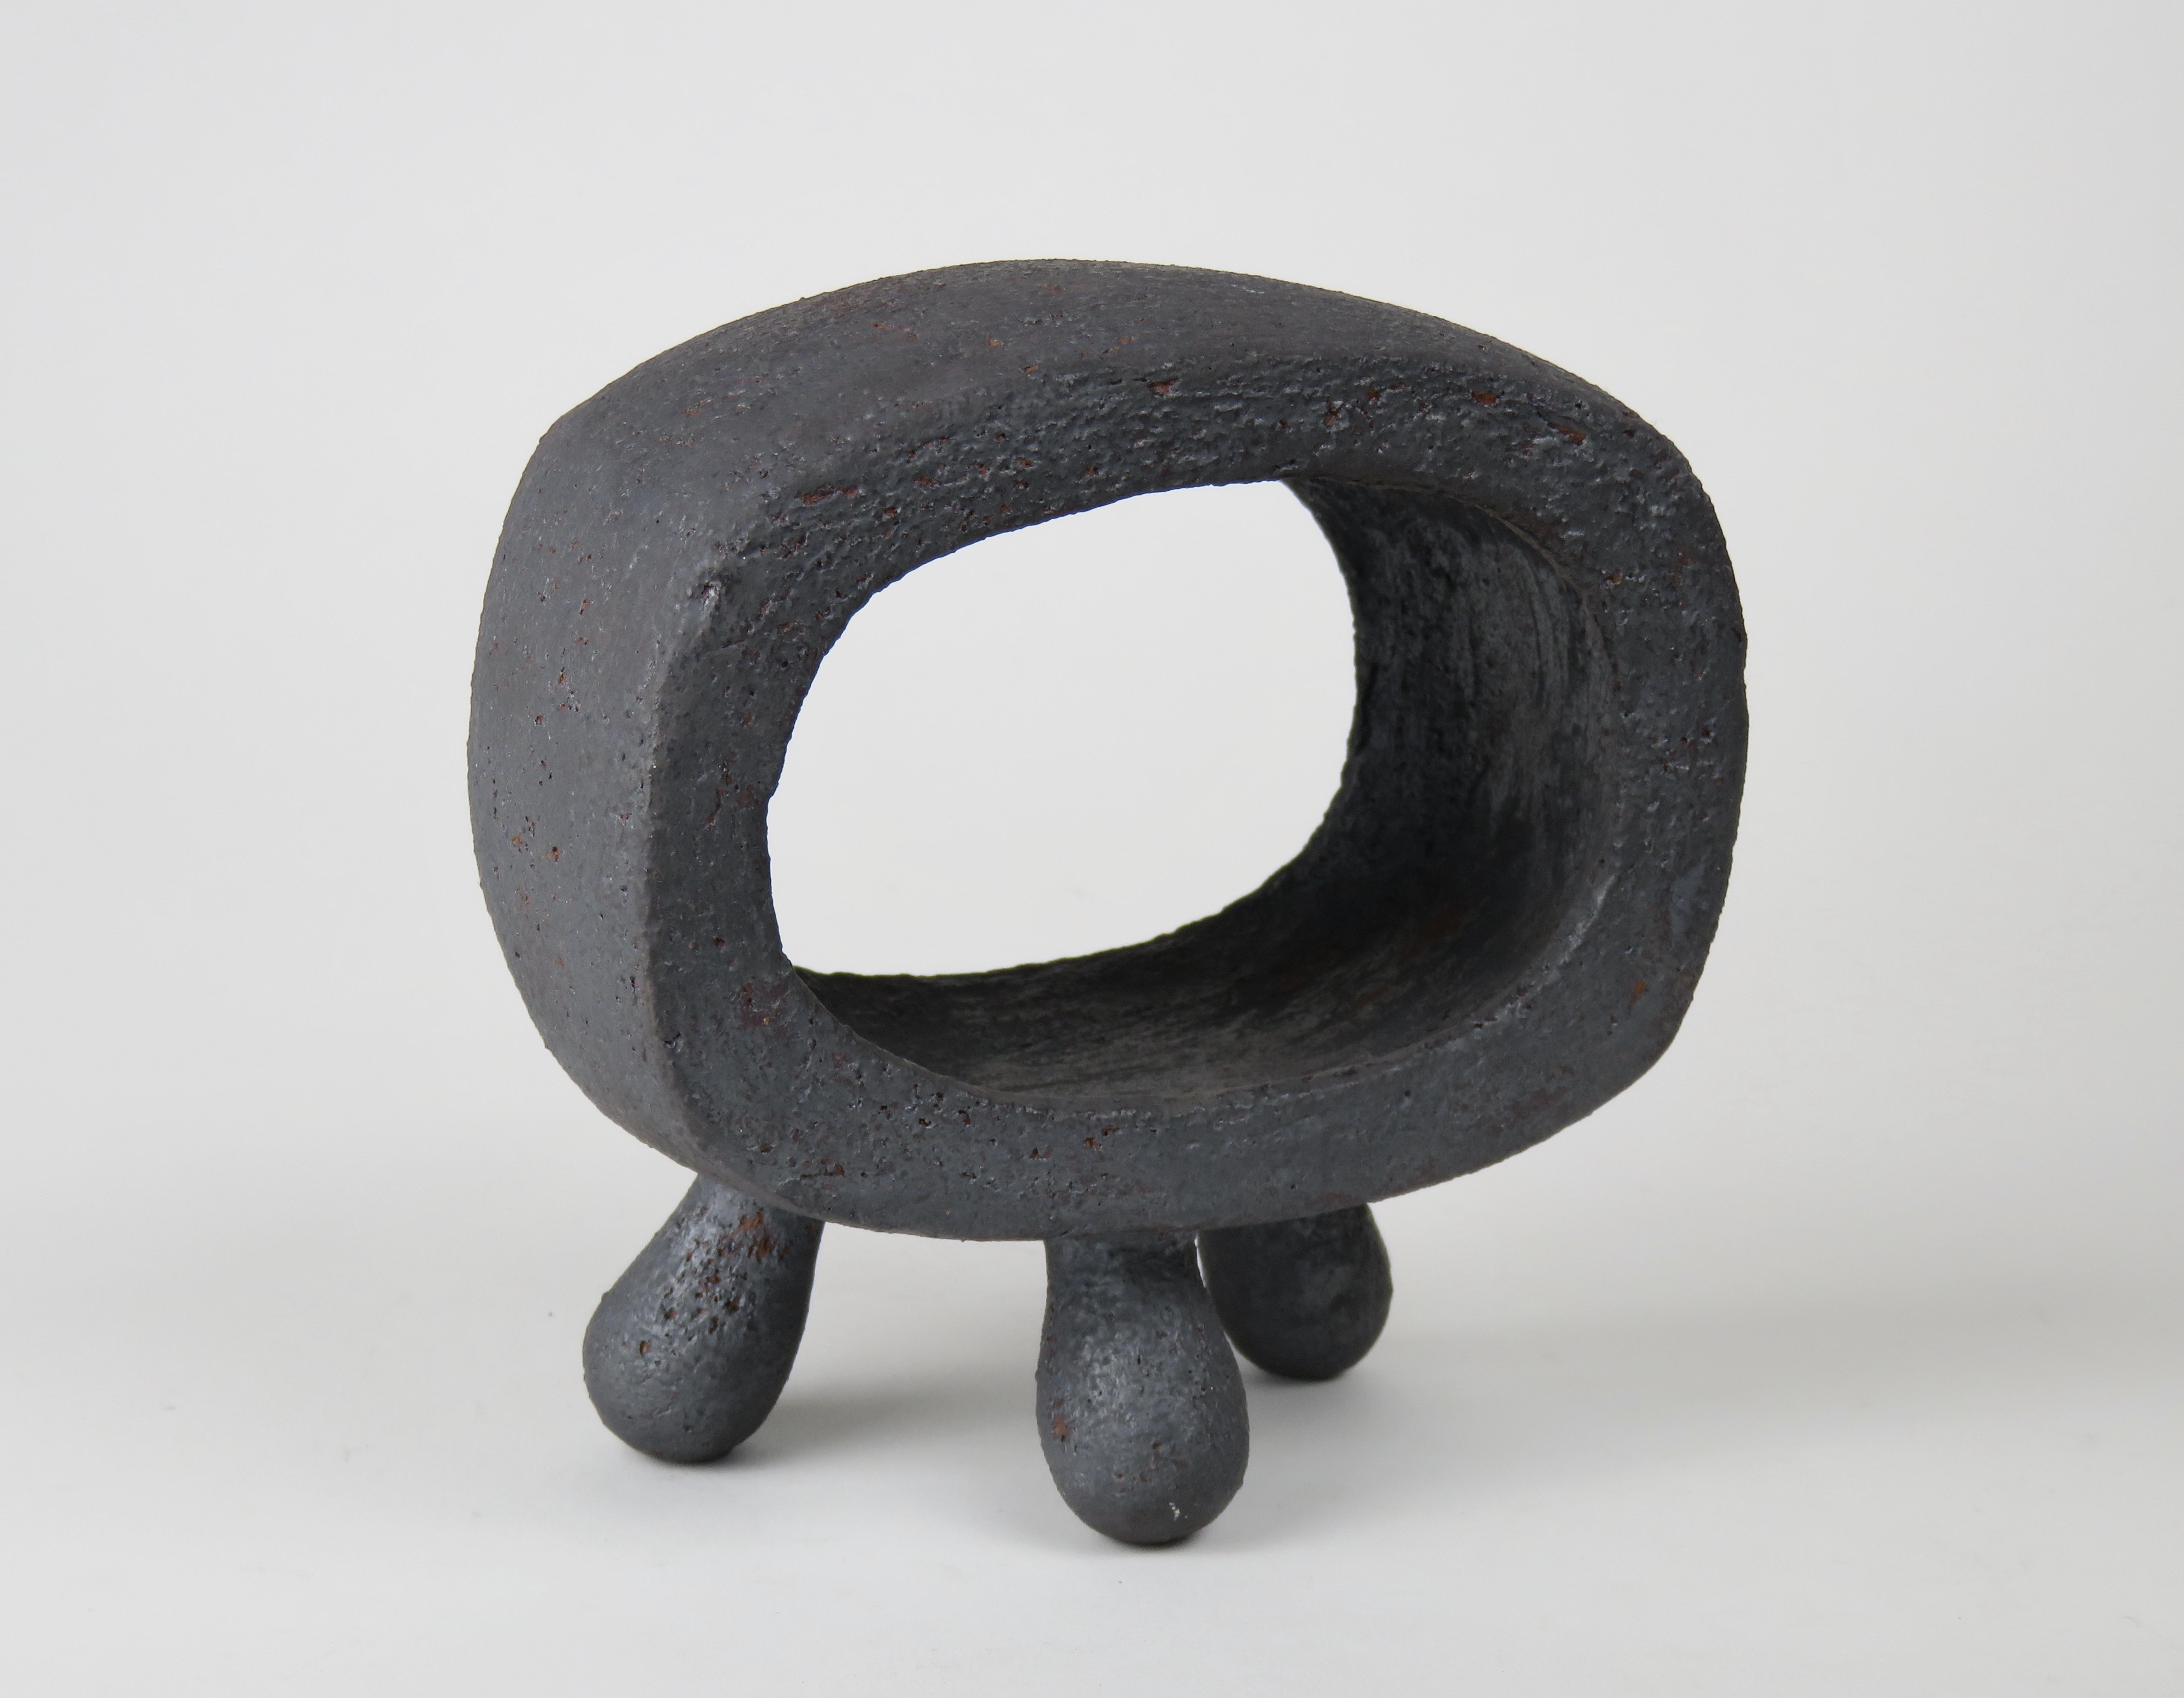 Organic Modern Small Dark Silver-Gray Hollow Rectangular Ring Ceramic Sculpture on 3 Legs